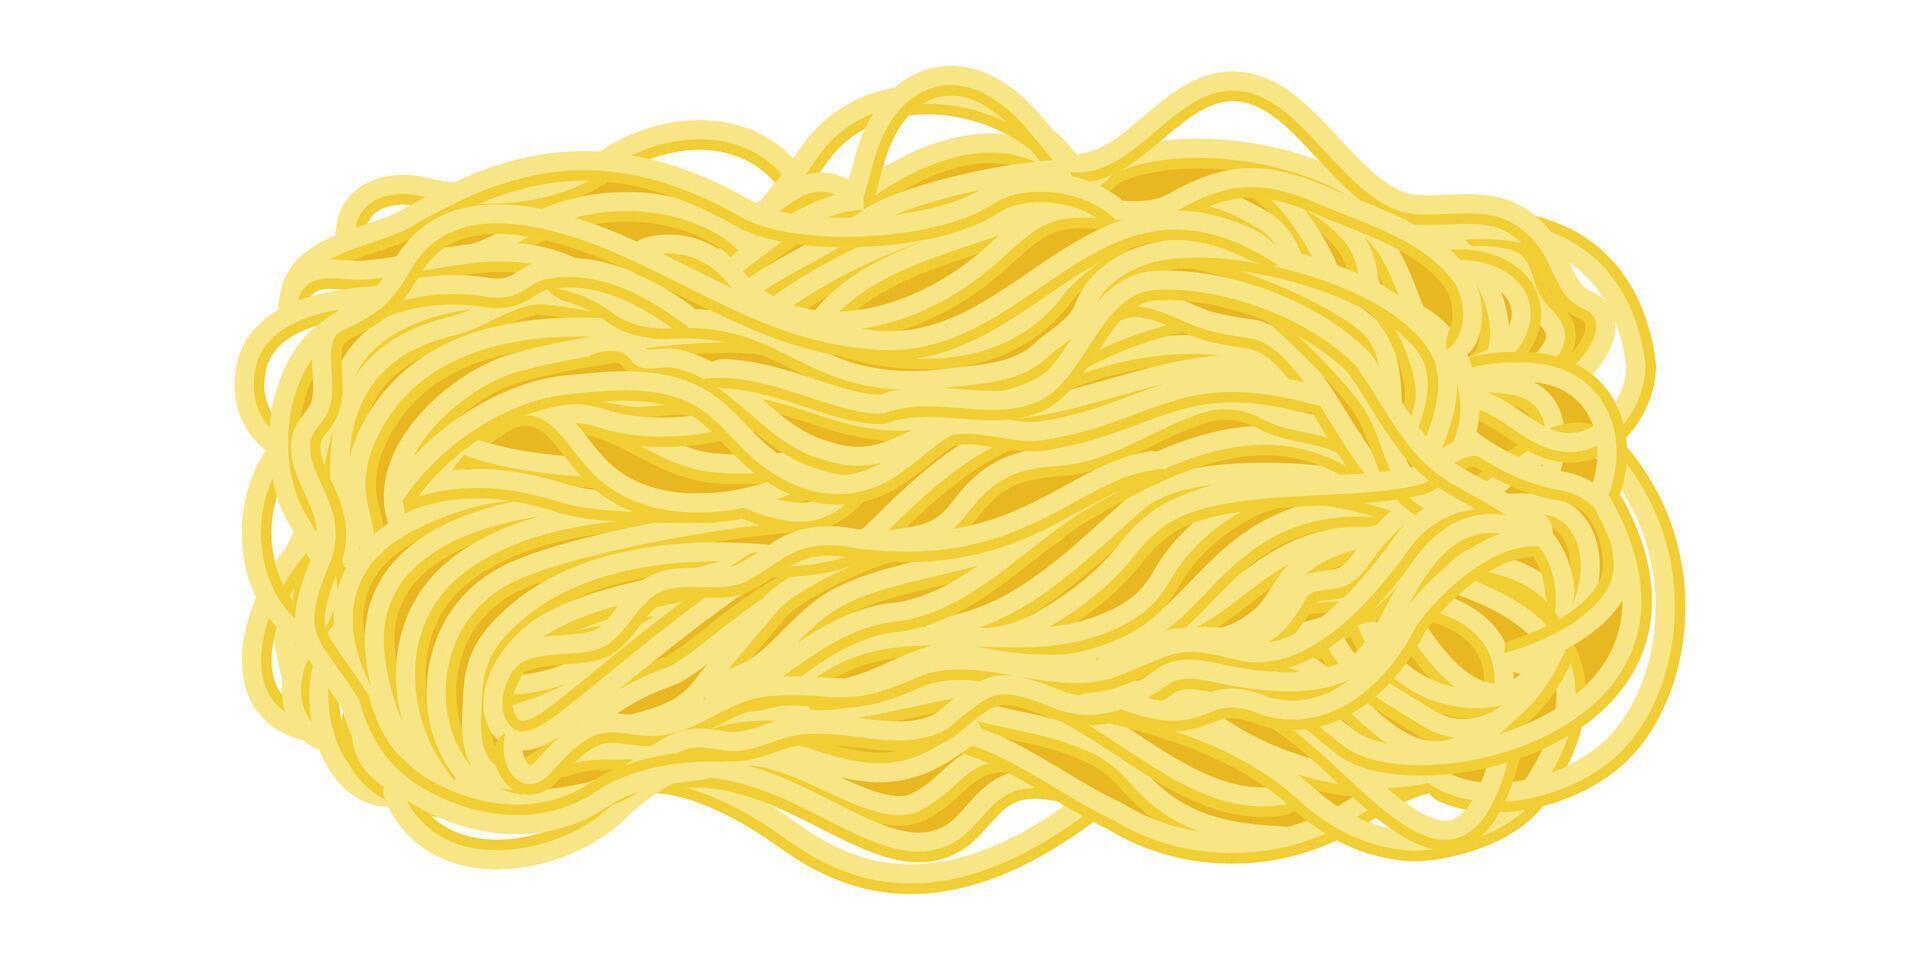 Isolated yellow ramen noodles. Abstract pattern of Italian spaghetti pasta, macaroni. Asian food. vector